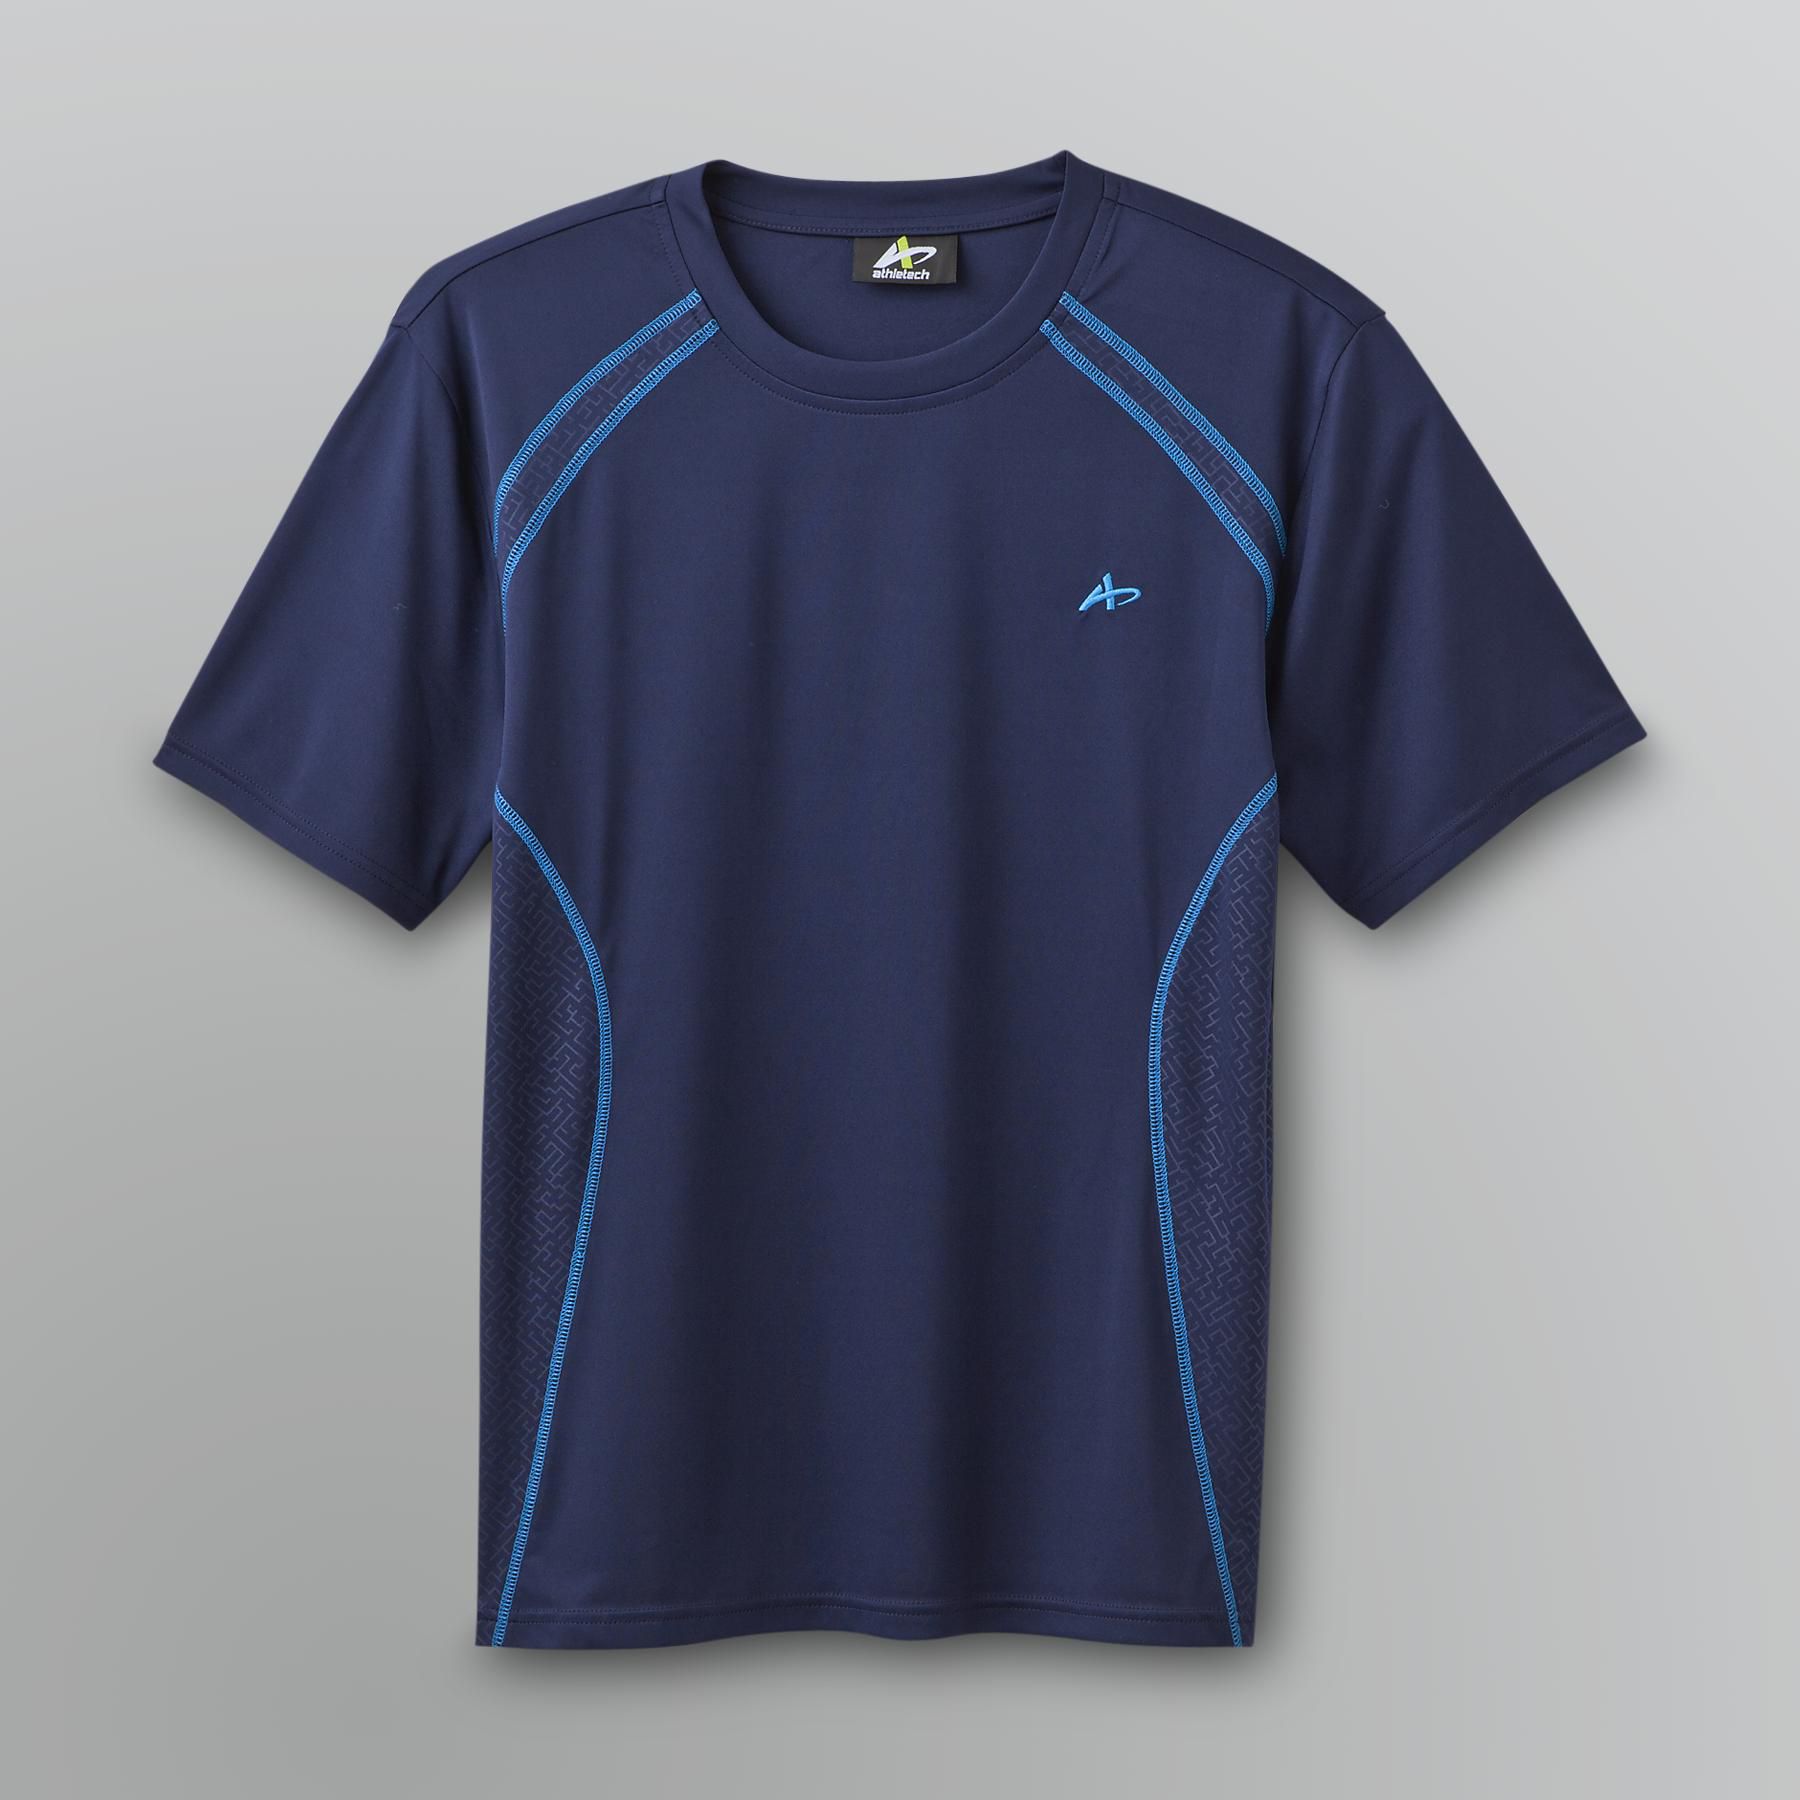 Athletech Men's Athletic Short-Sleeve T-Shirt